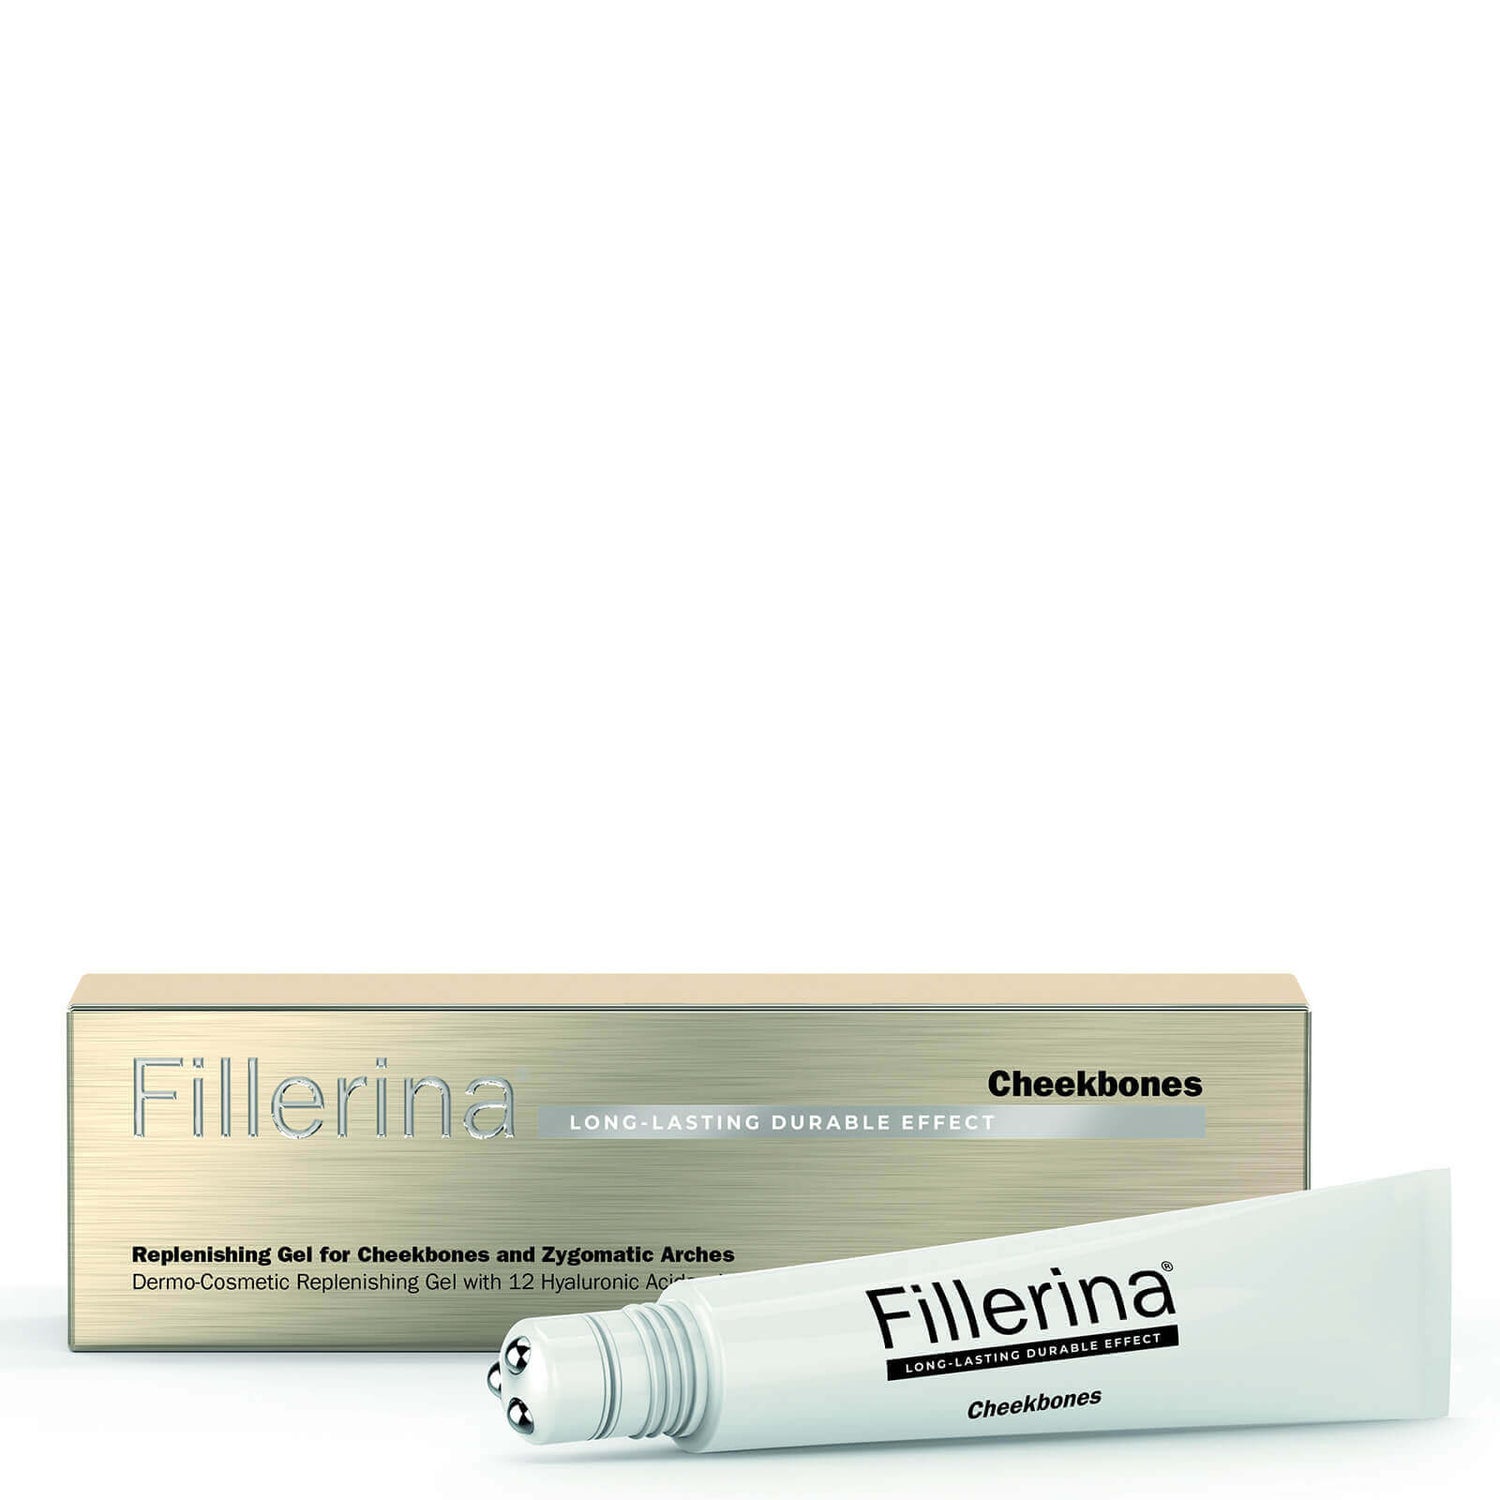 Fillerina Long Lasting Durable Effect Lip Cheekbones Grade 3